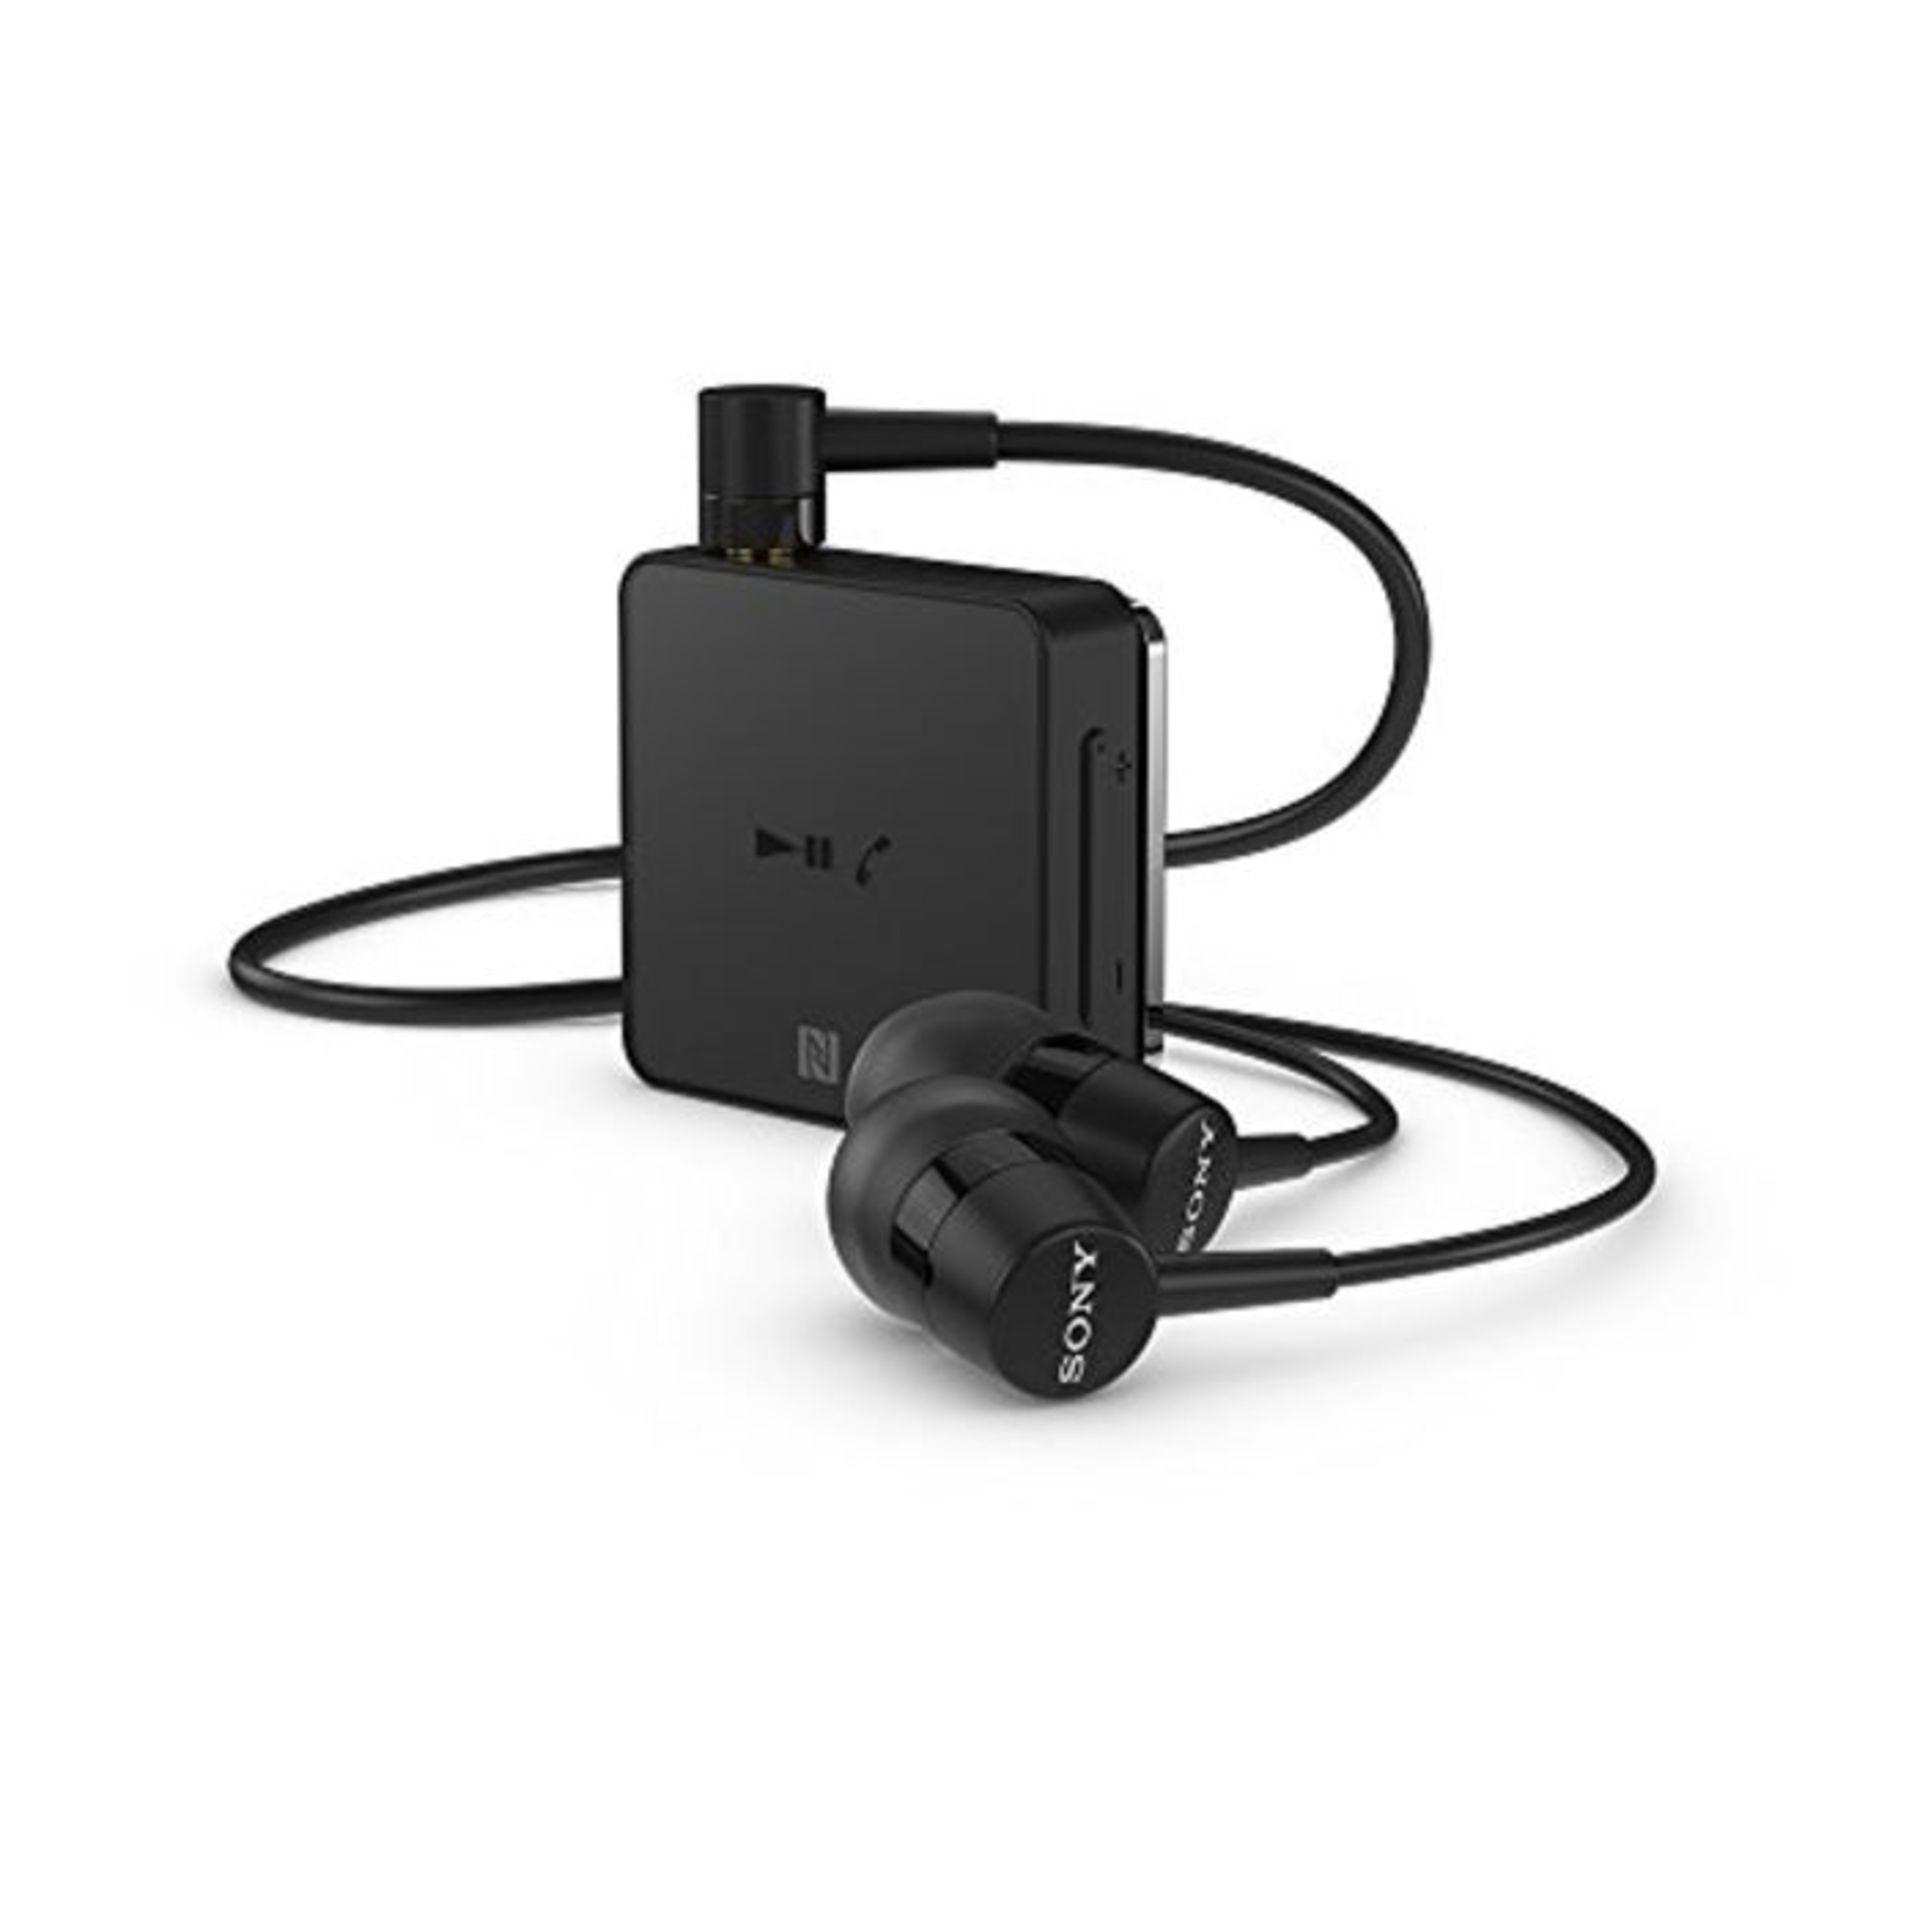 Sony SBH24 Stereo Bluetooth Headset - Black